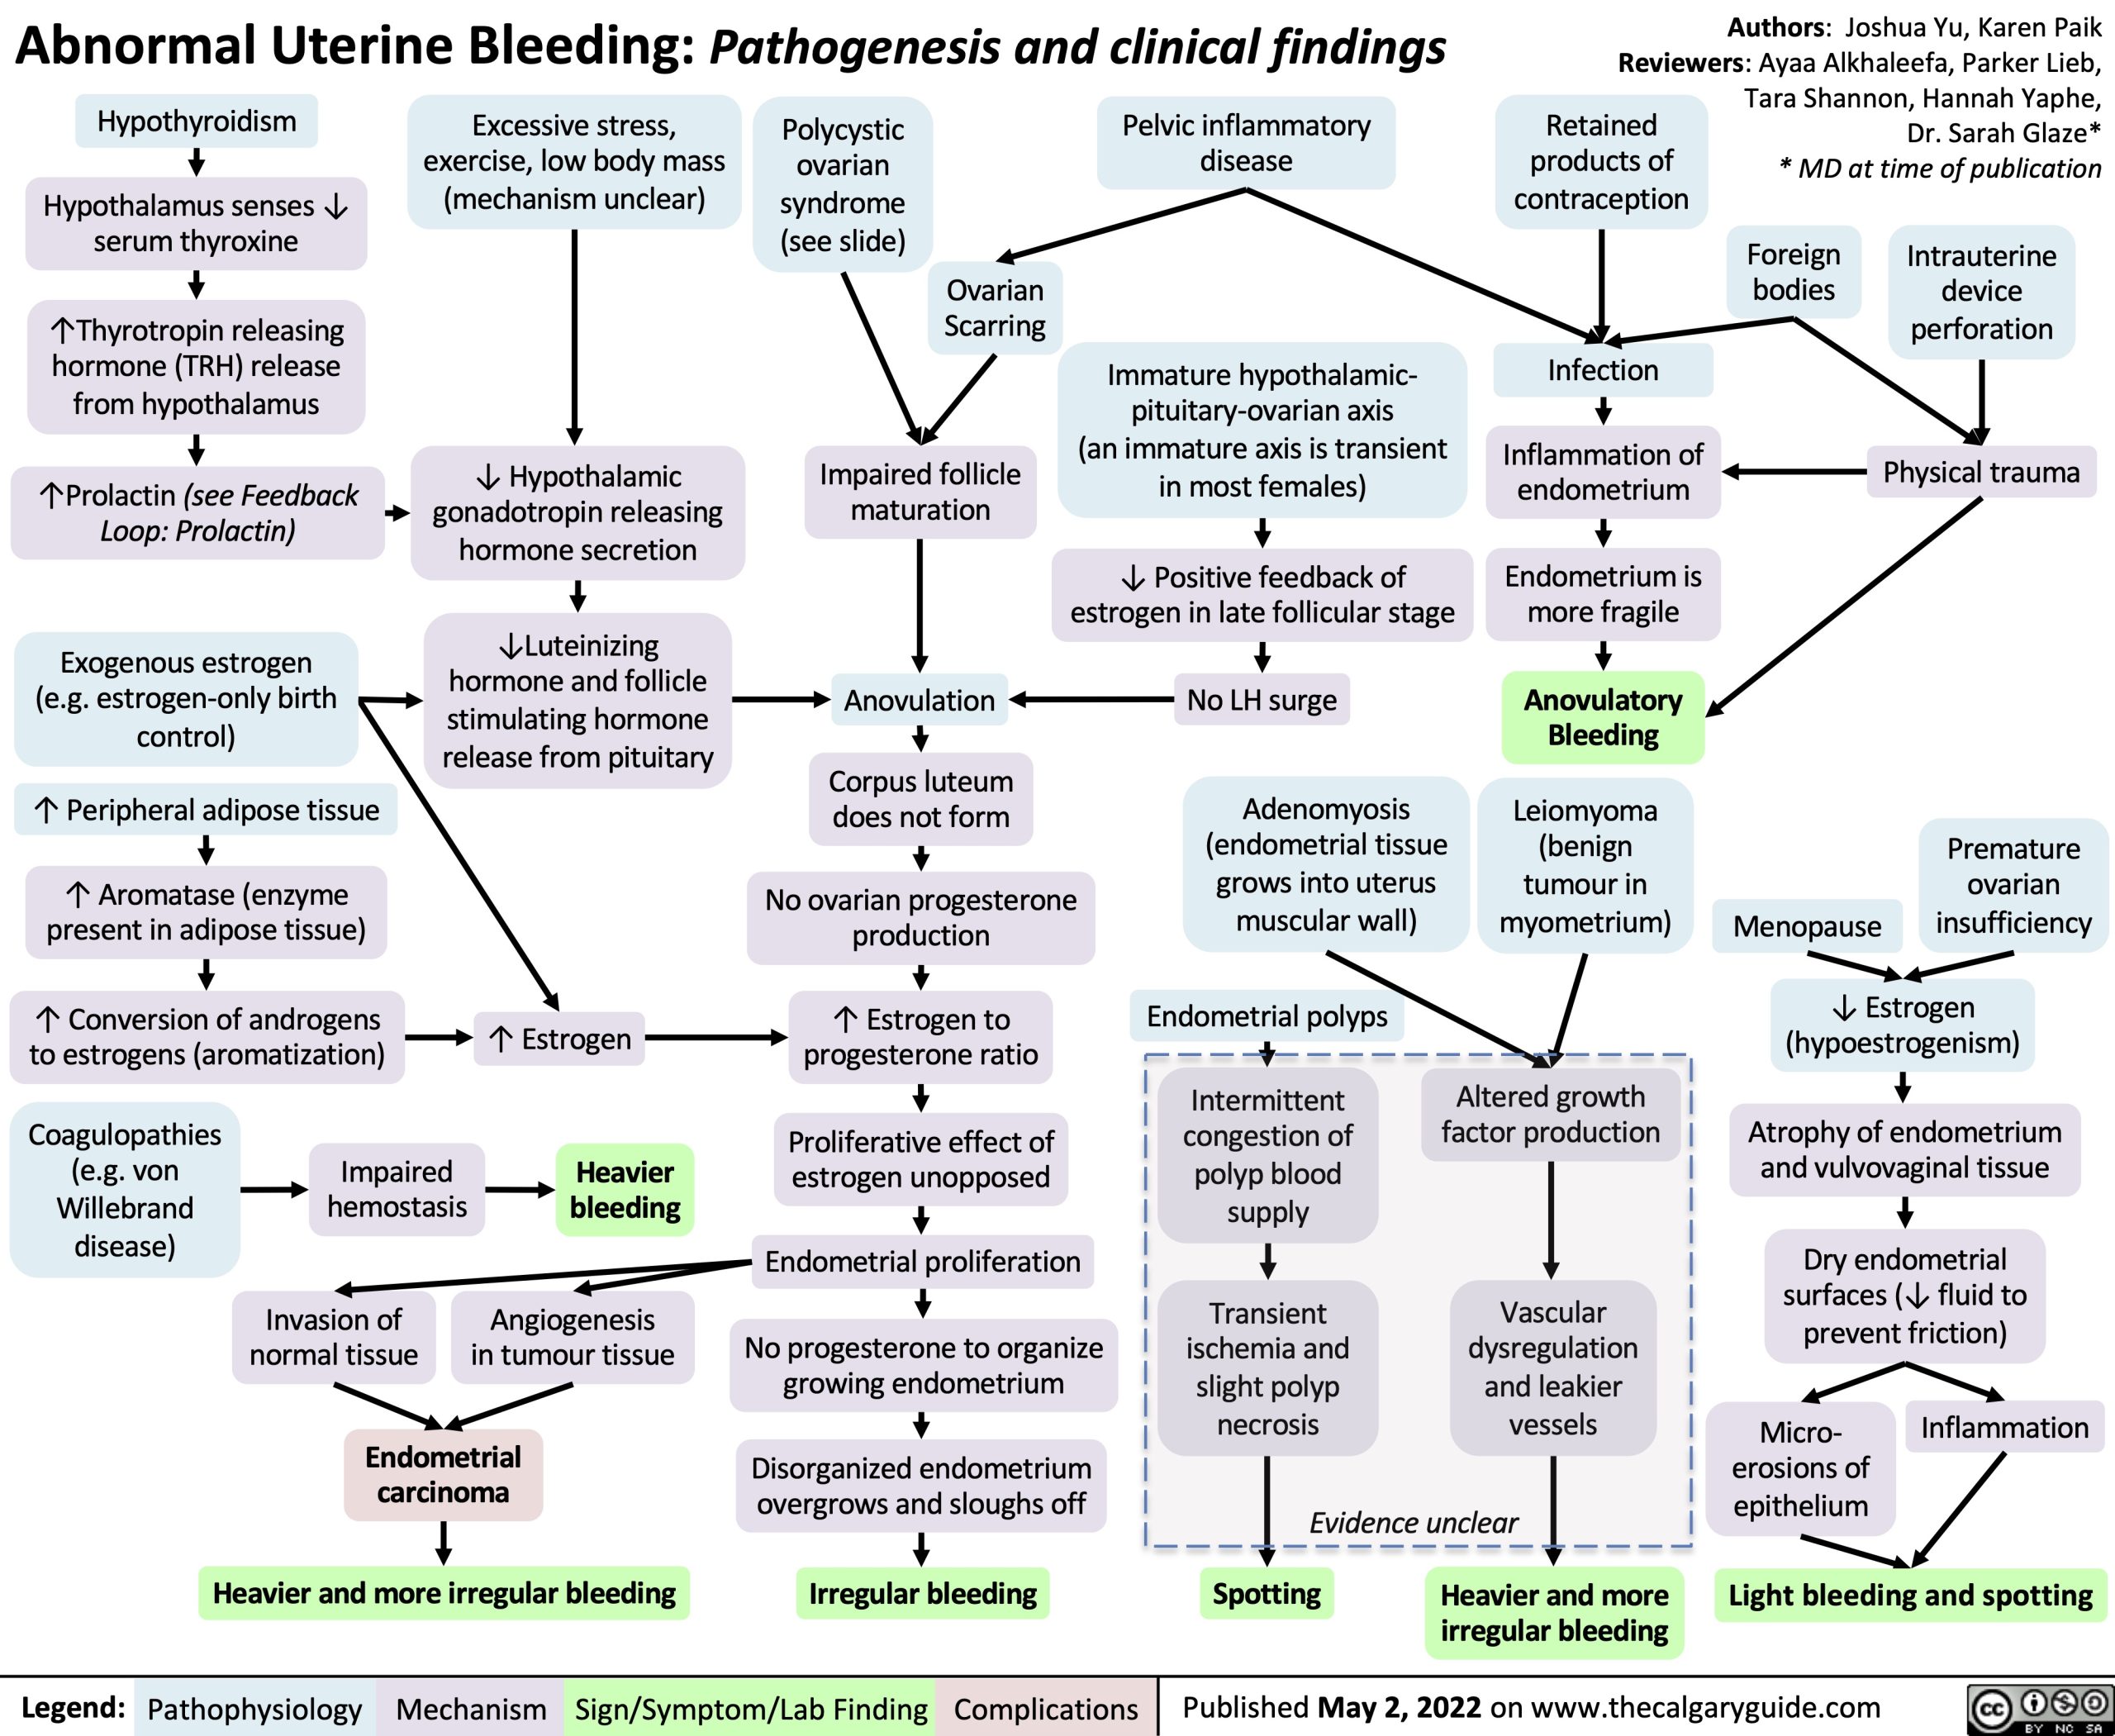 Abnormal Uterine Bleeding Aub Pathogenesis And Clinical Findings Calgary Guide